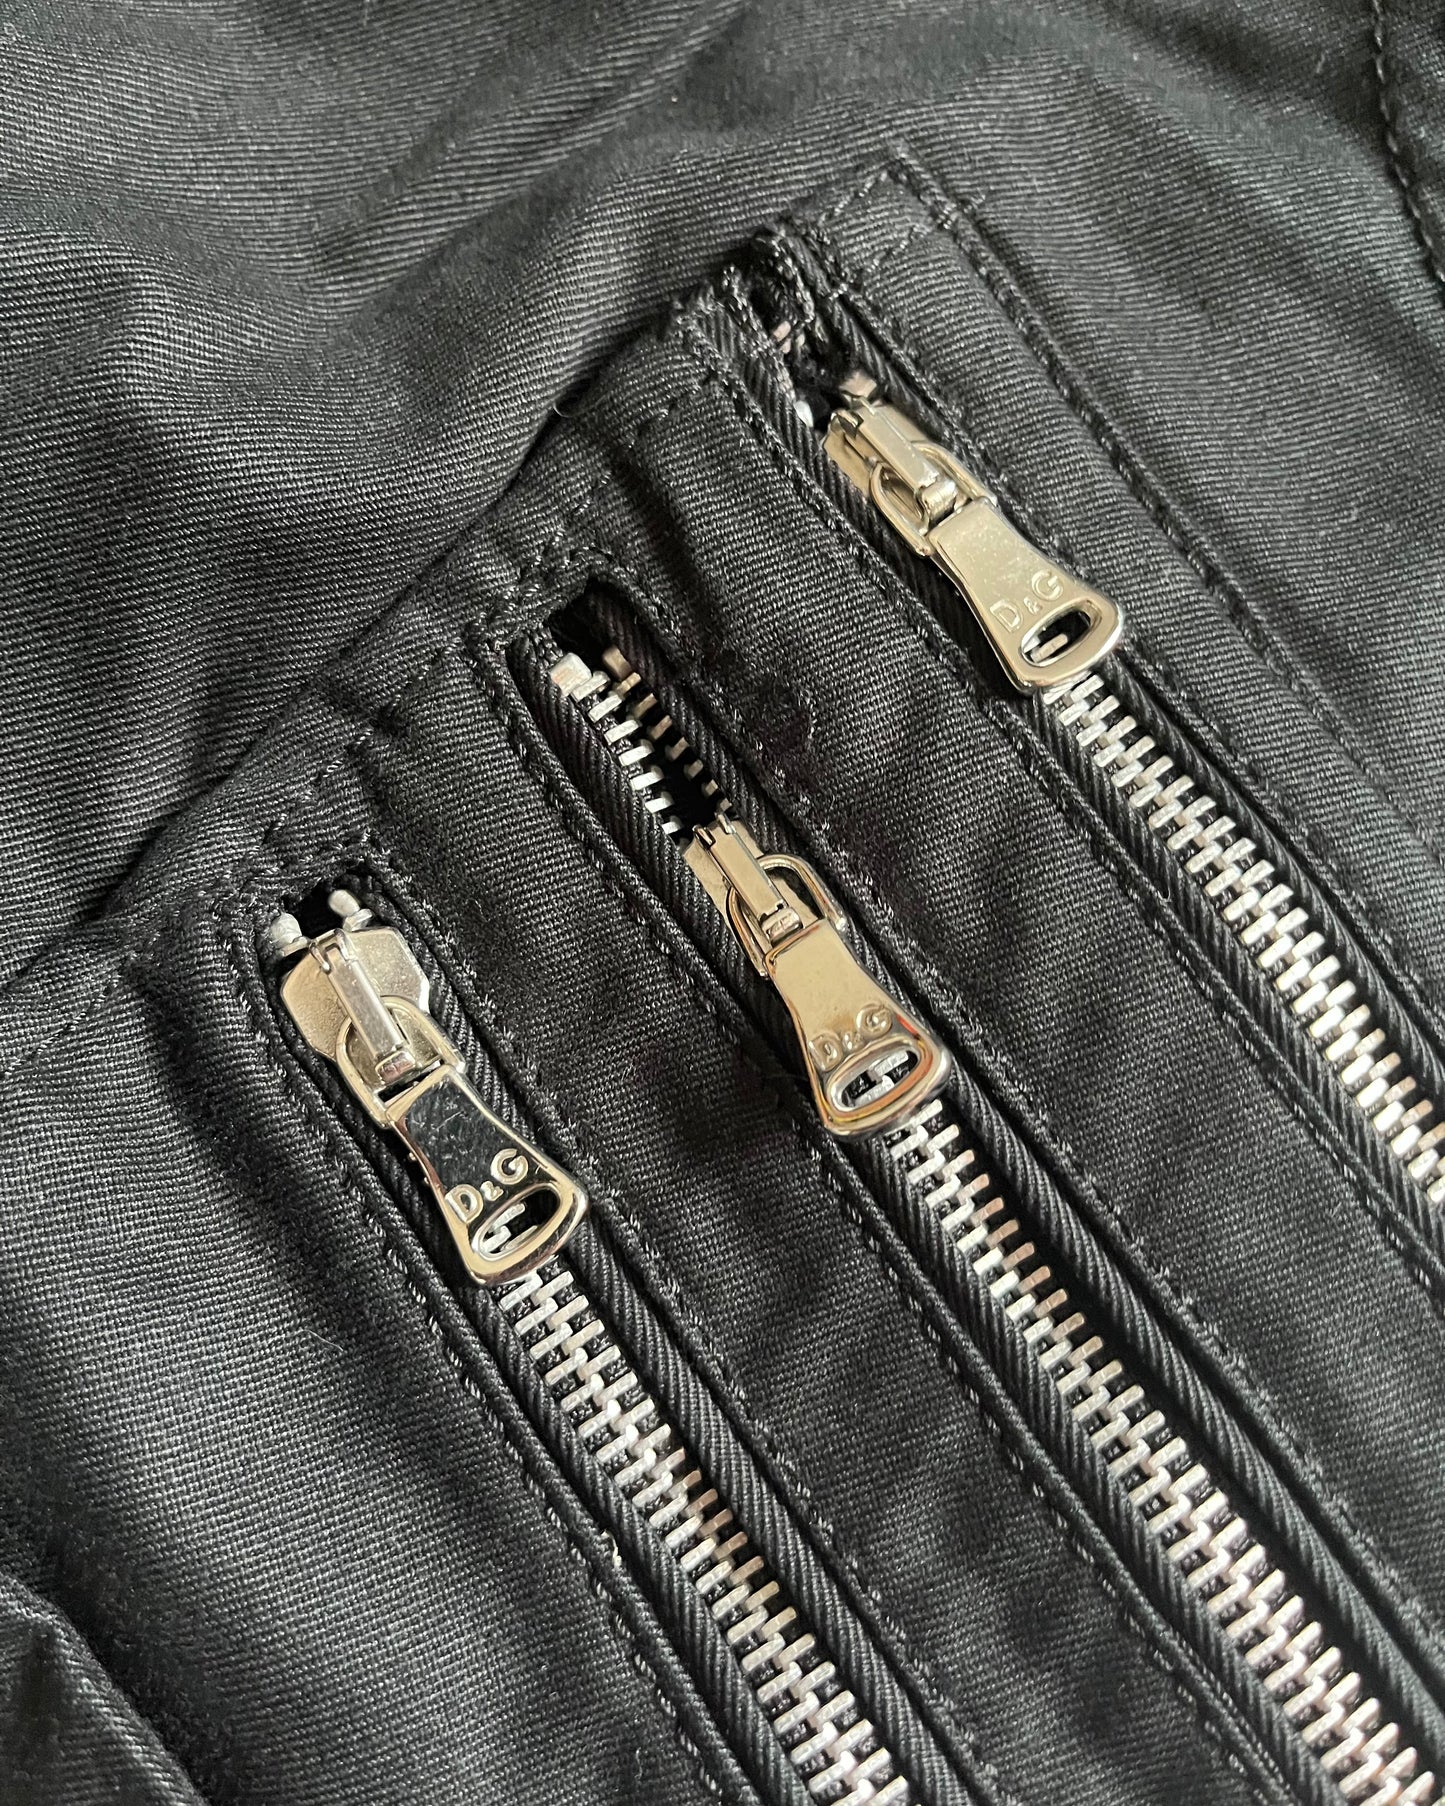 SS20 Dolce & Gabbana Zipper-Forged Black Pants (S)